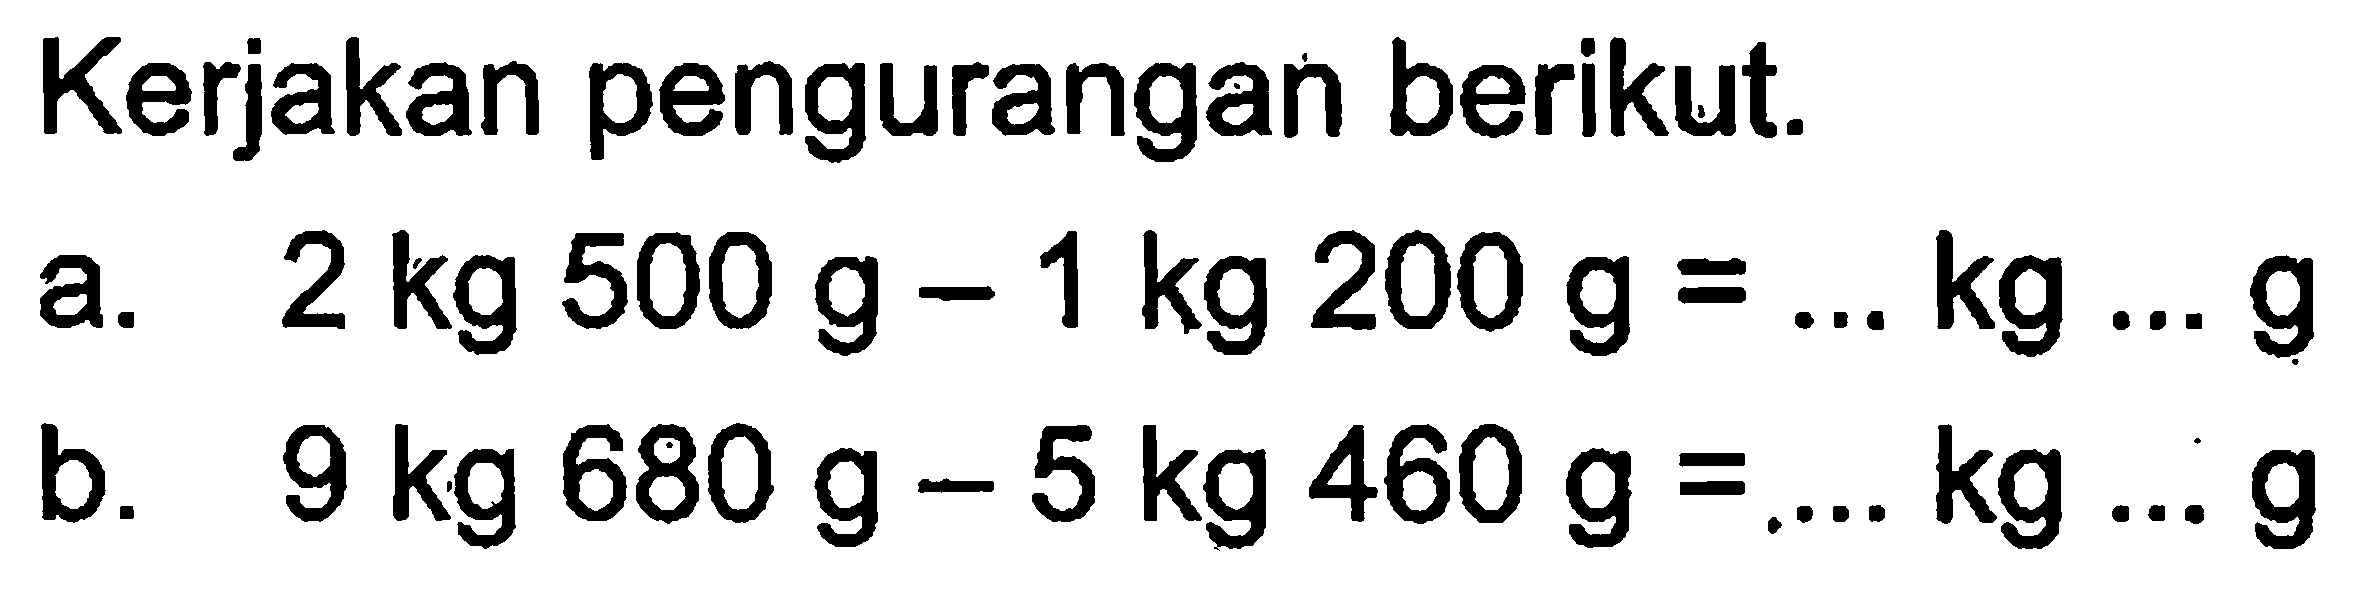 Kerjakan pengurangan berikut. a. 2 kg 500 g - 1 kg 200 g = ... kg ... g b. 9 kg 680 g - 5 kg 460 g = ... kg ... g